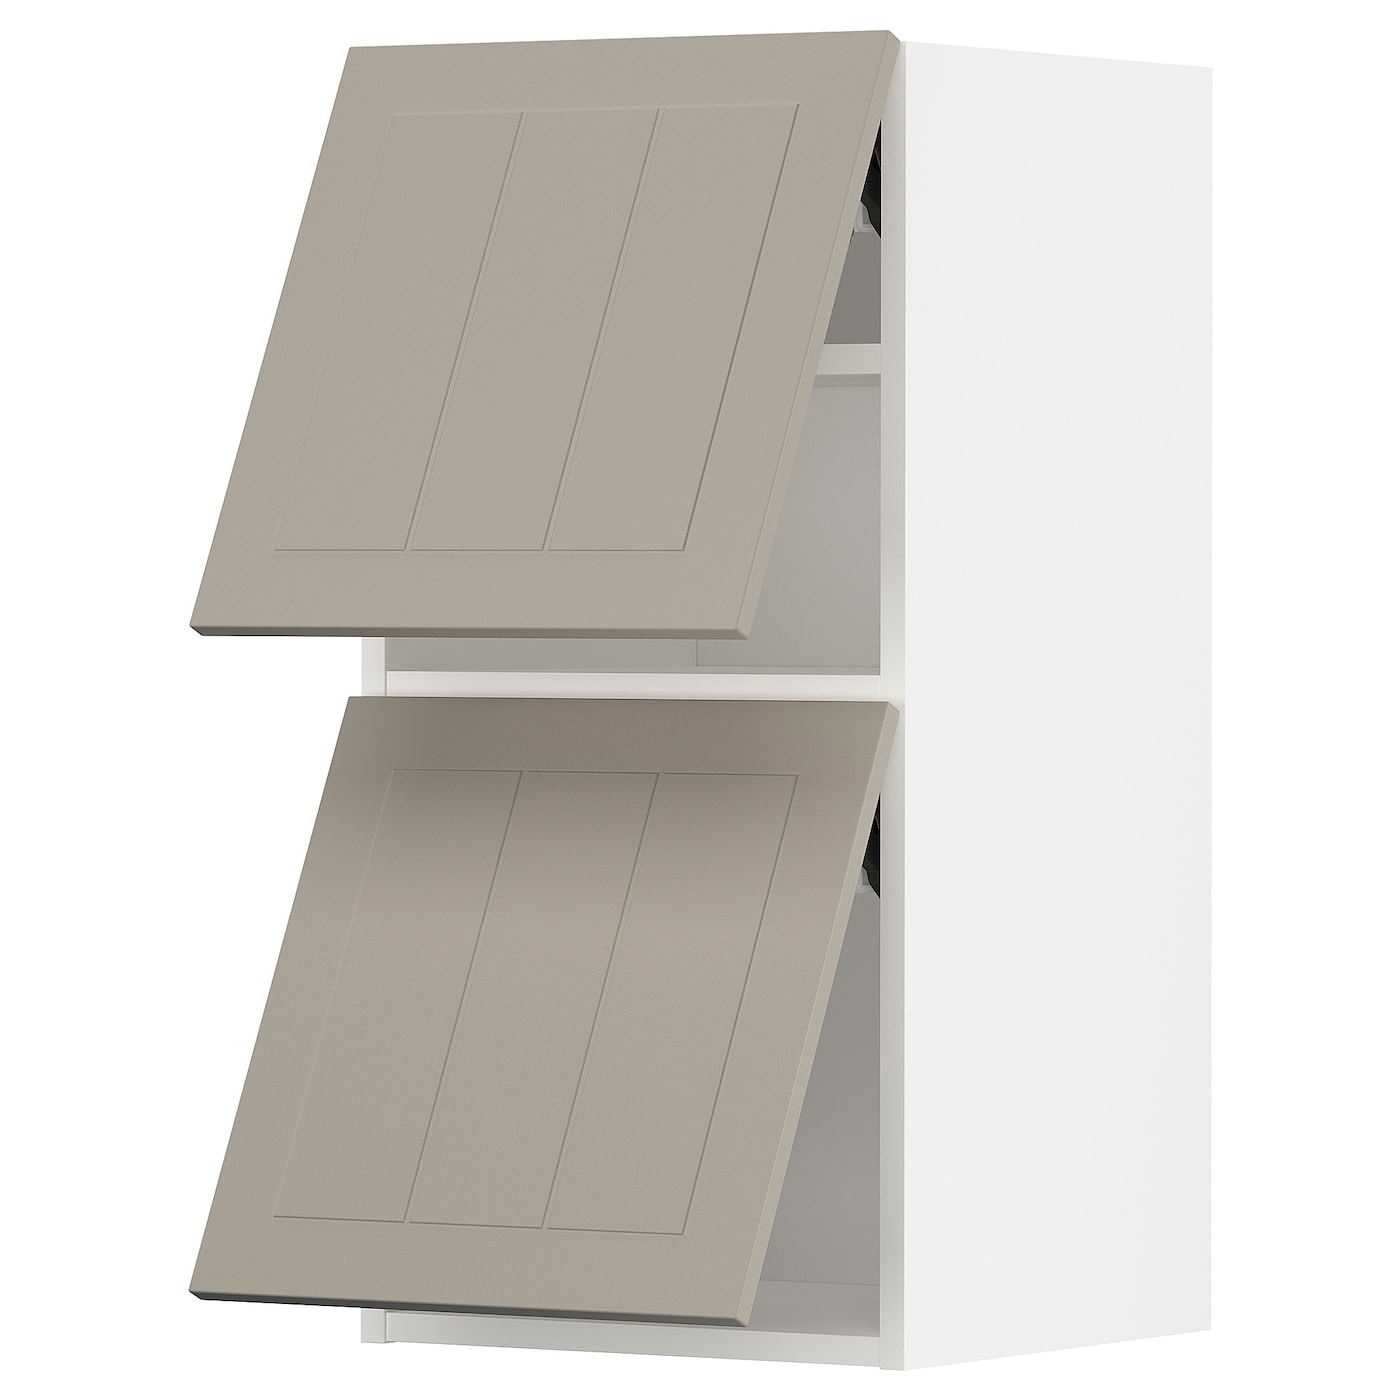 Навесной шкаф - METOD IKEA/ МЕТОД ИКЕА, 80х40 см, светло-коричневый /белый